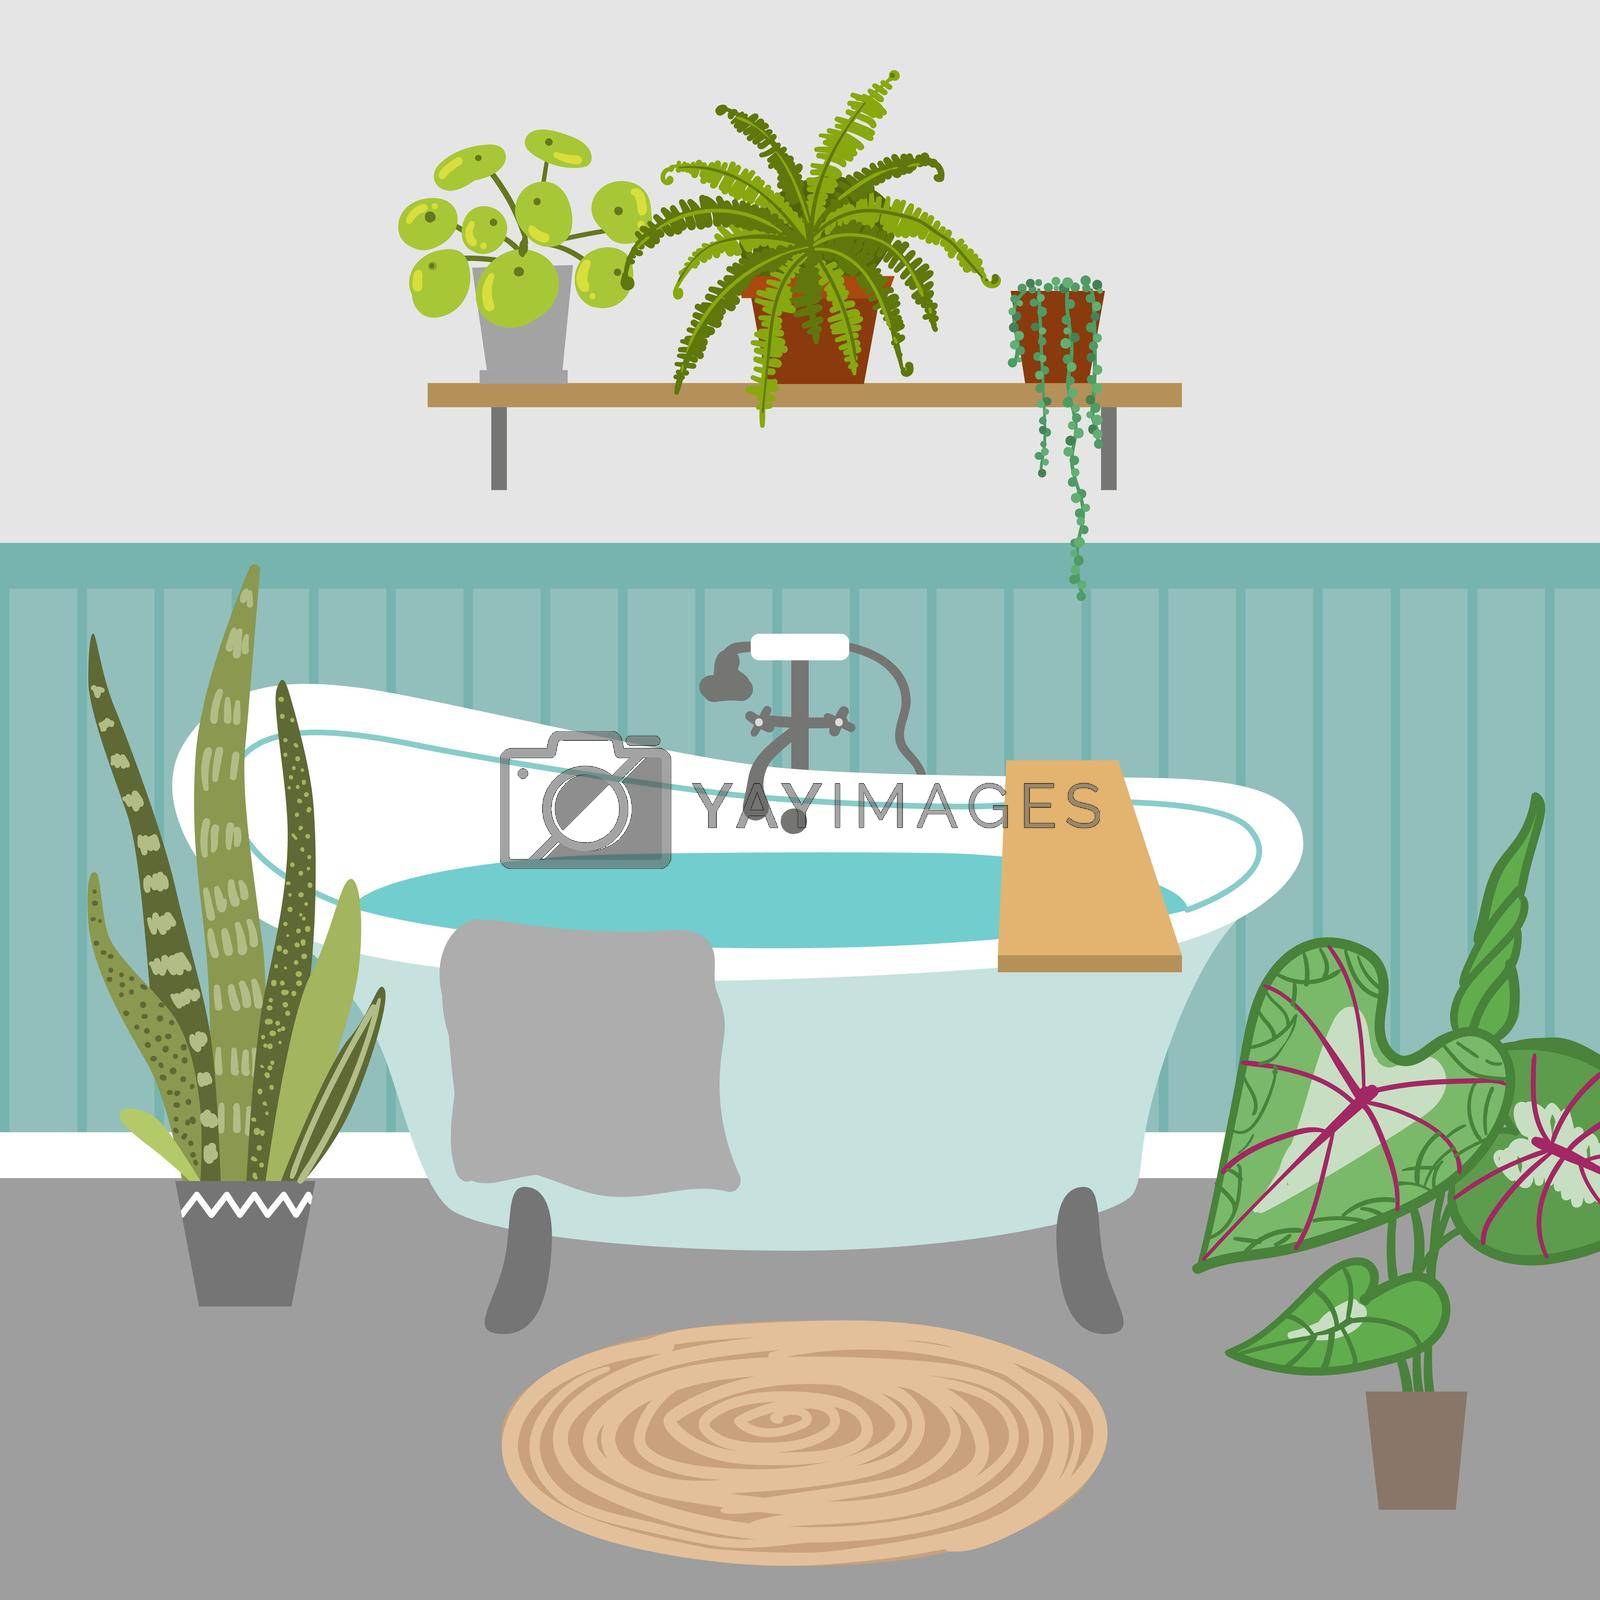 Royalty free image of Bathroom interior vector illustration. by steshnikova